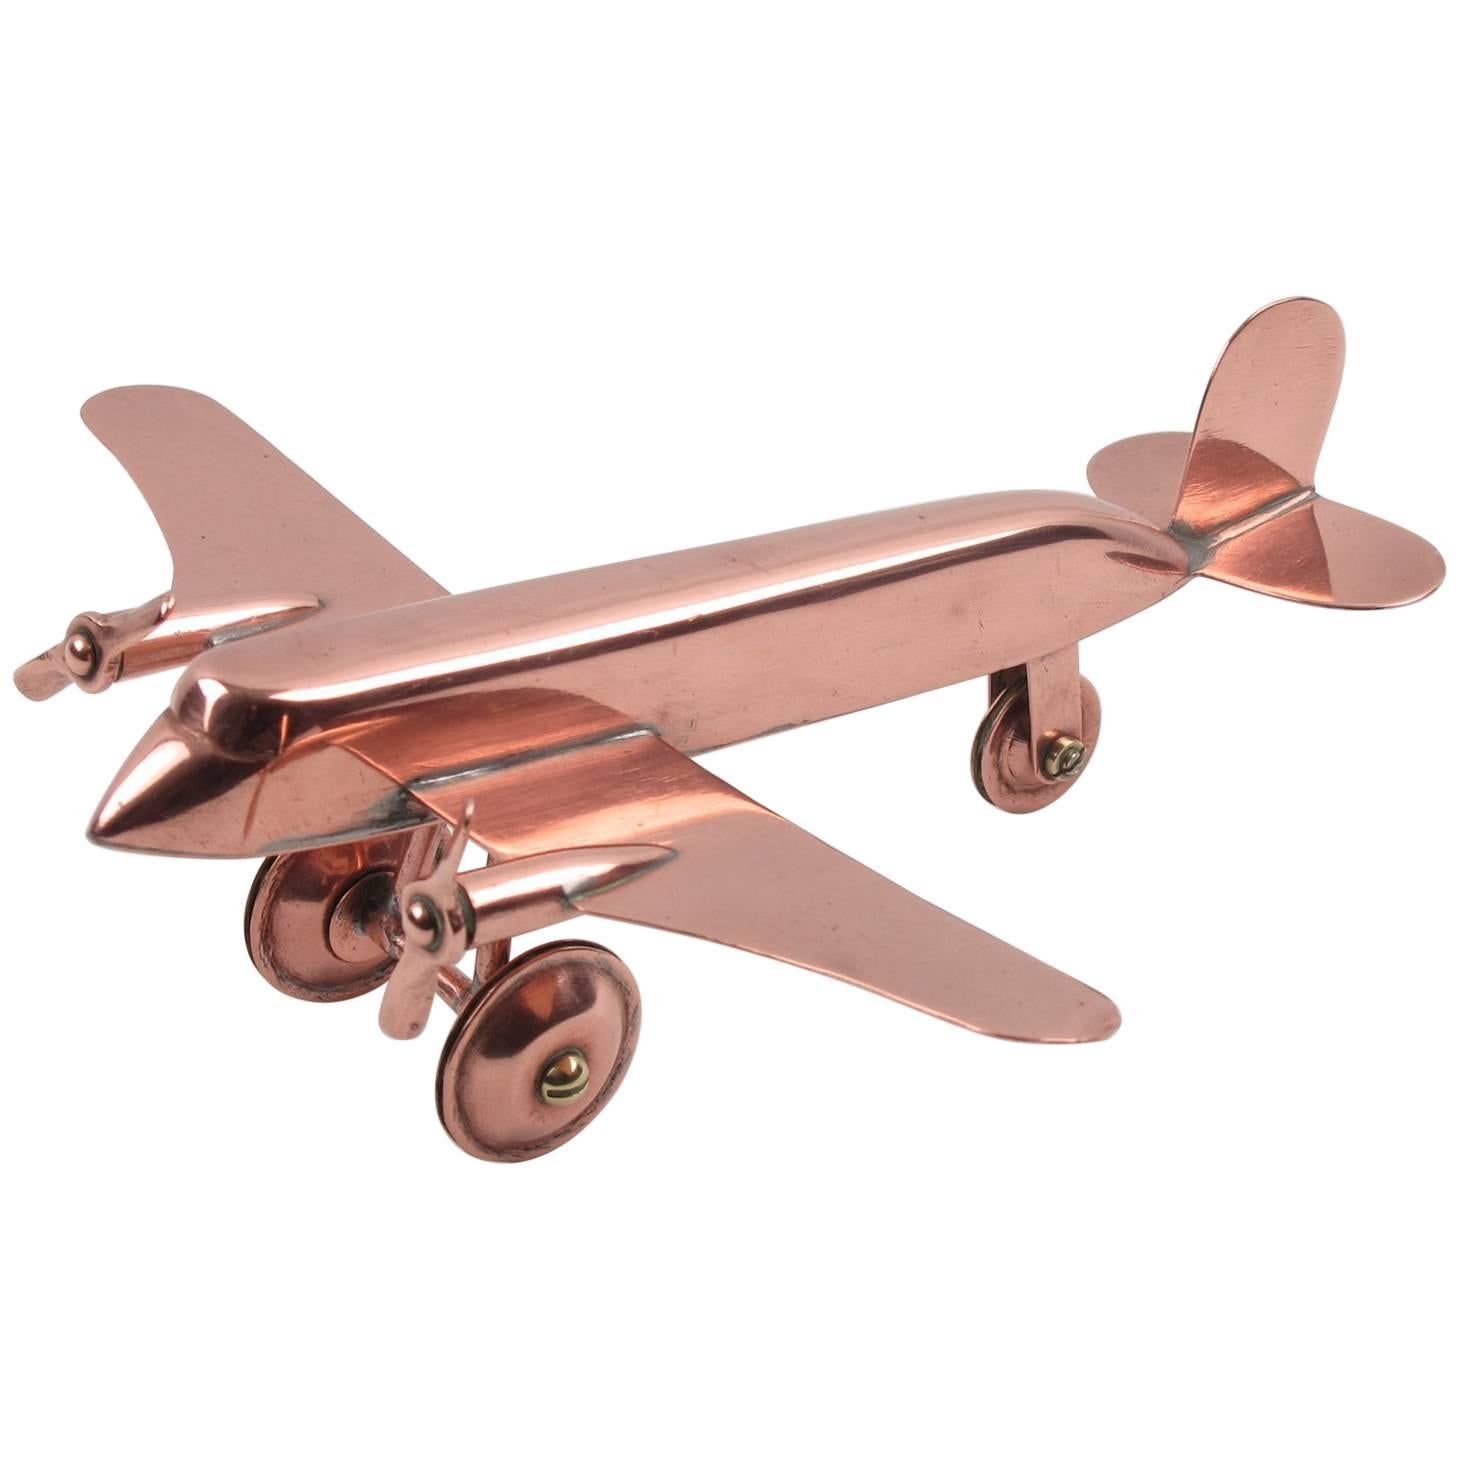 1950s Mid-Century Modernist Copper Airplane Model